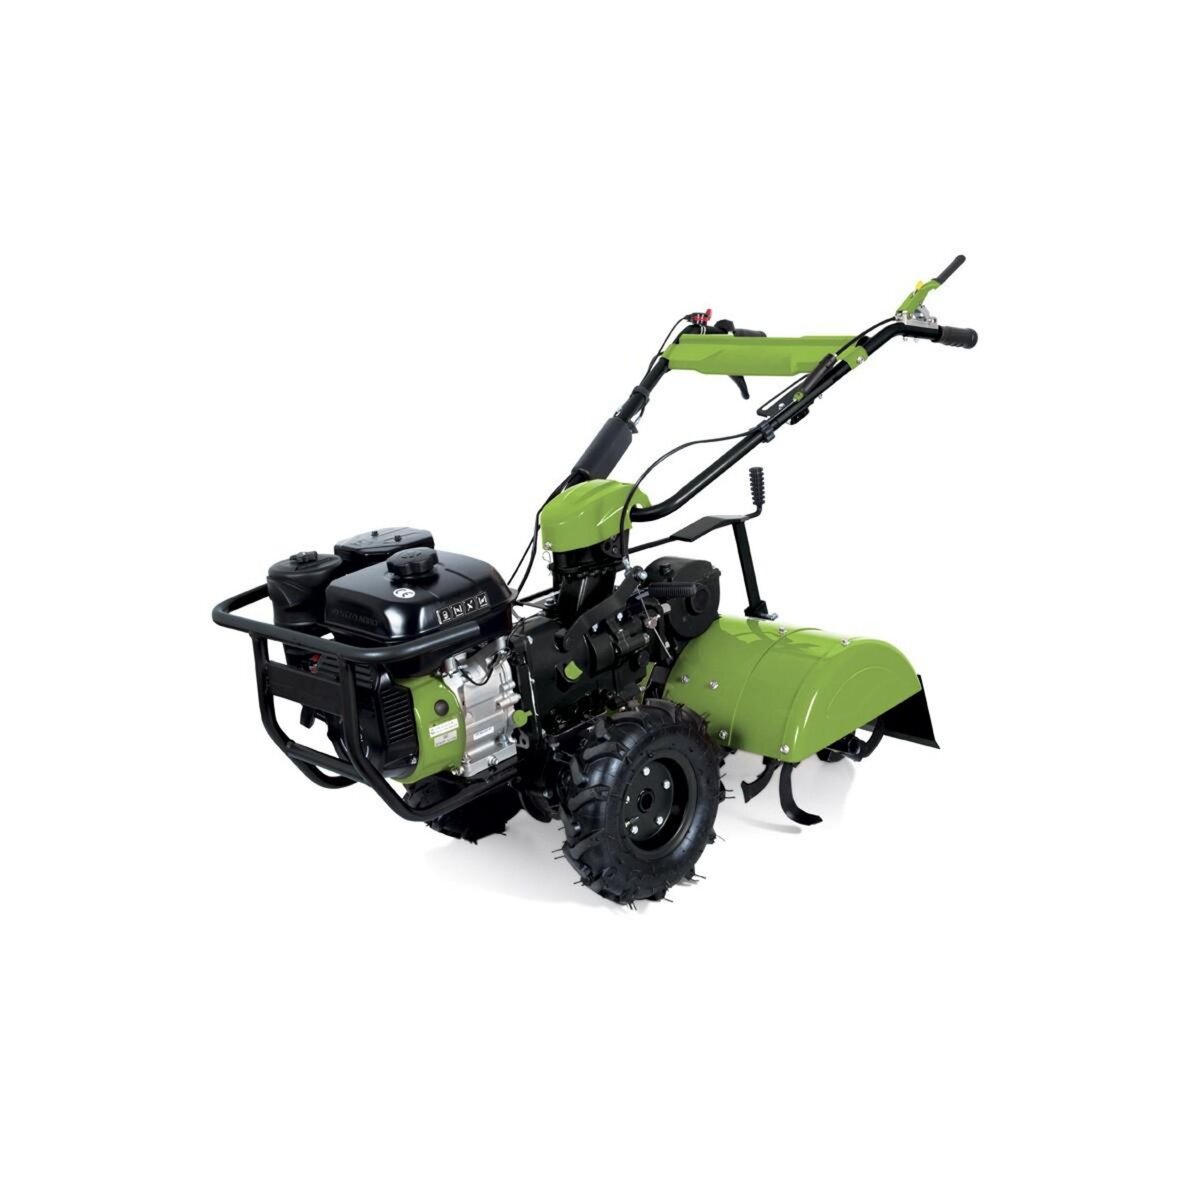 VITO Garden Motoculteur à essence 5200W 4T 212 cm3 7CV VITO Transmission directe